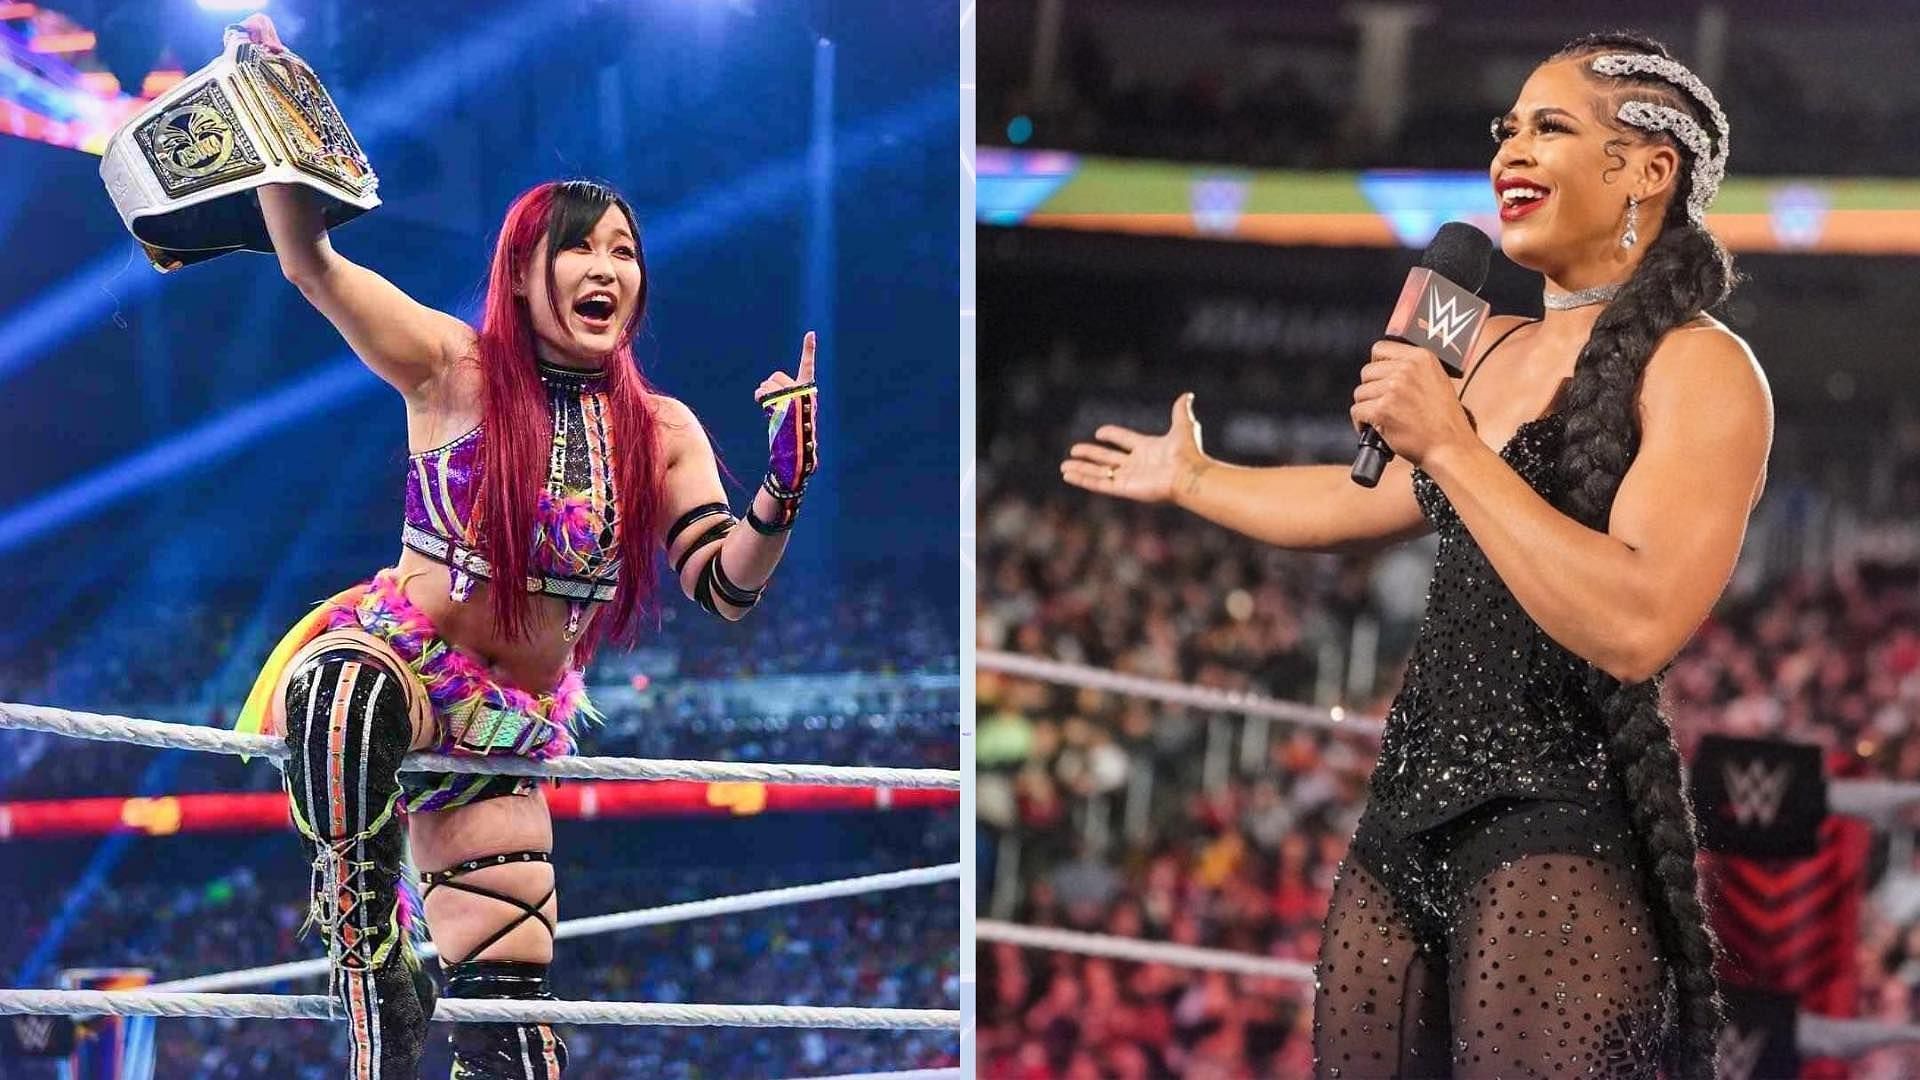 IYO SKY and Bianca Belair will clash at WWE Crown Jewel 2023